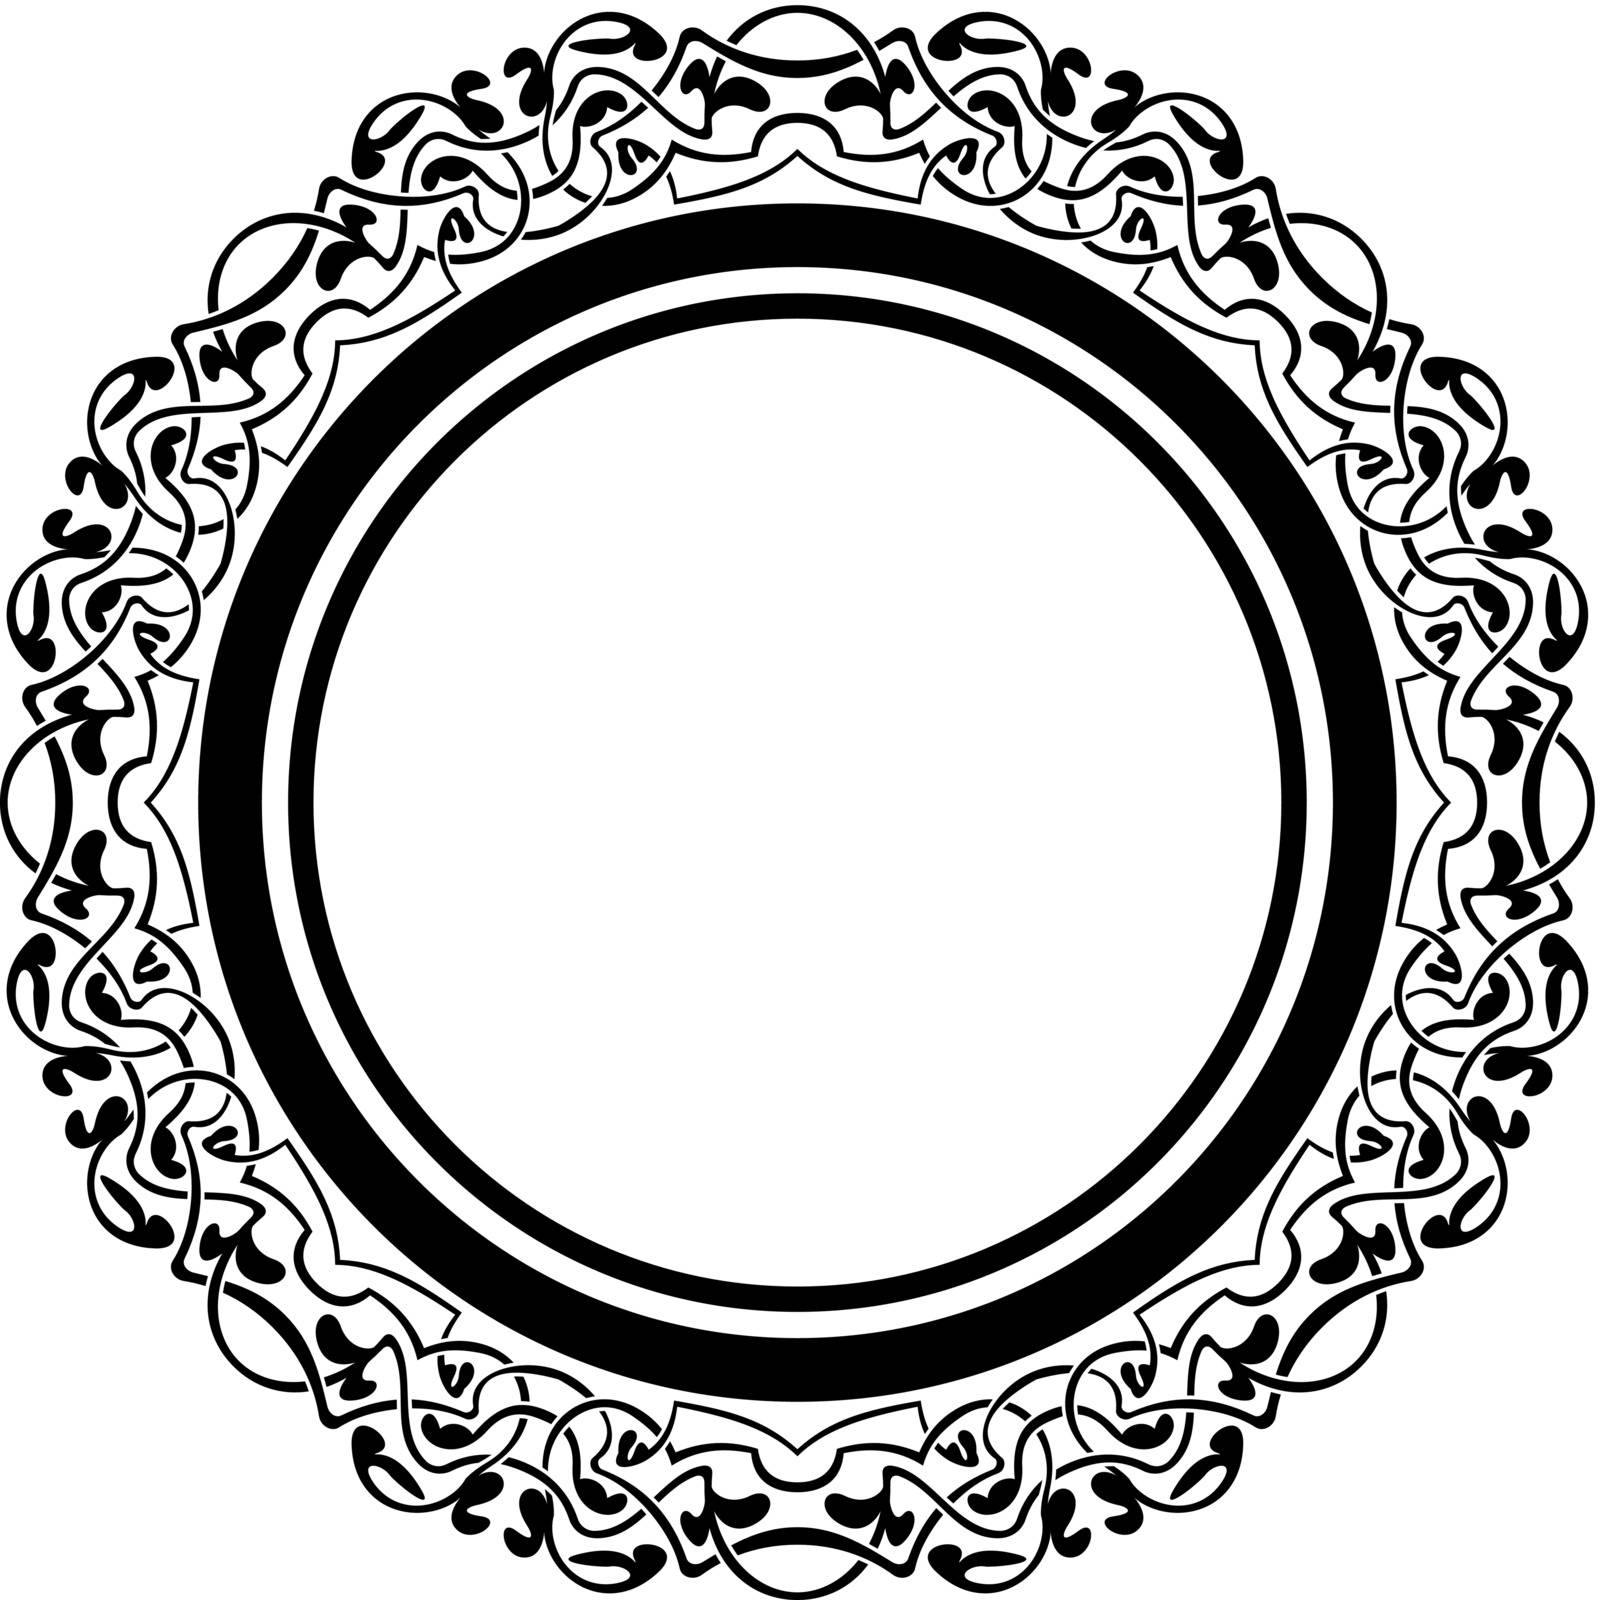 Black frame with ornamental border on white background